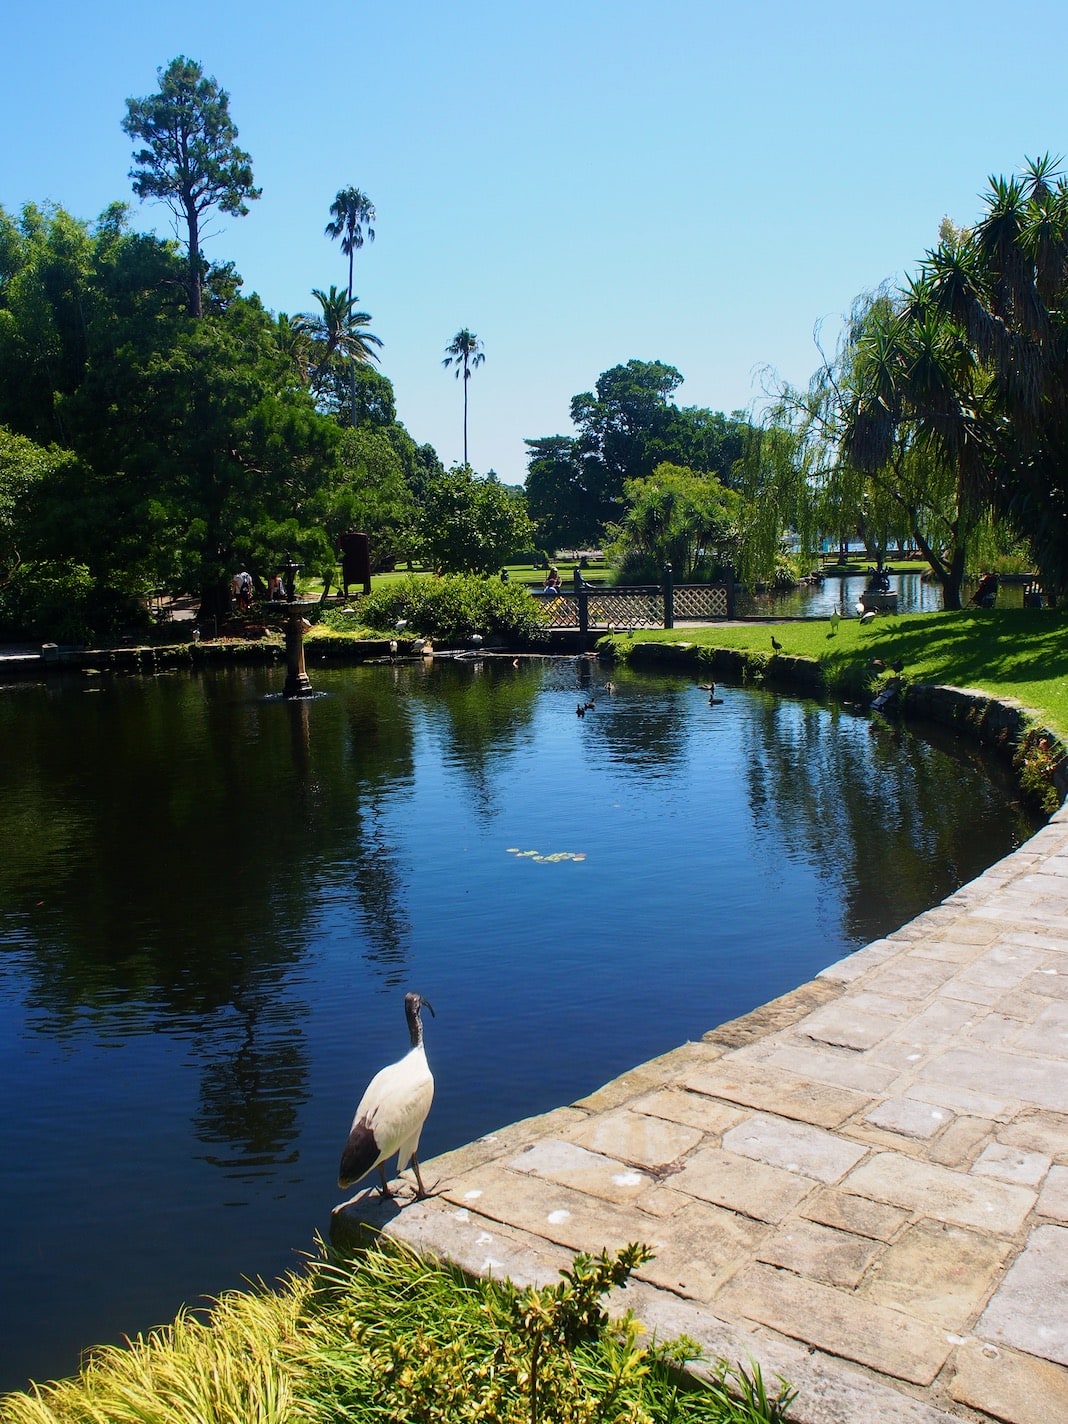 Royal Botanic Garden Sydney Lotus Pond in Summer